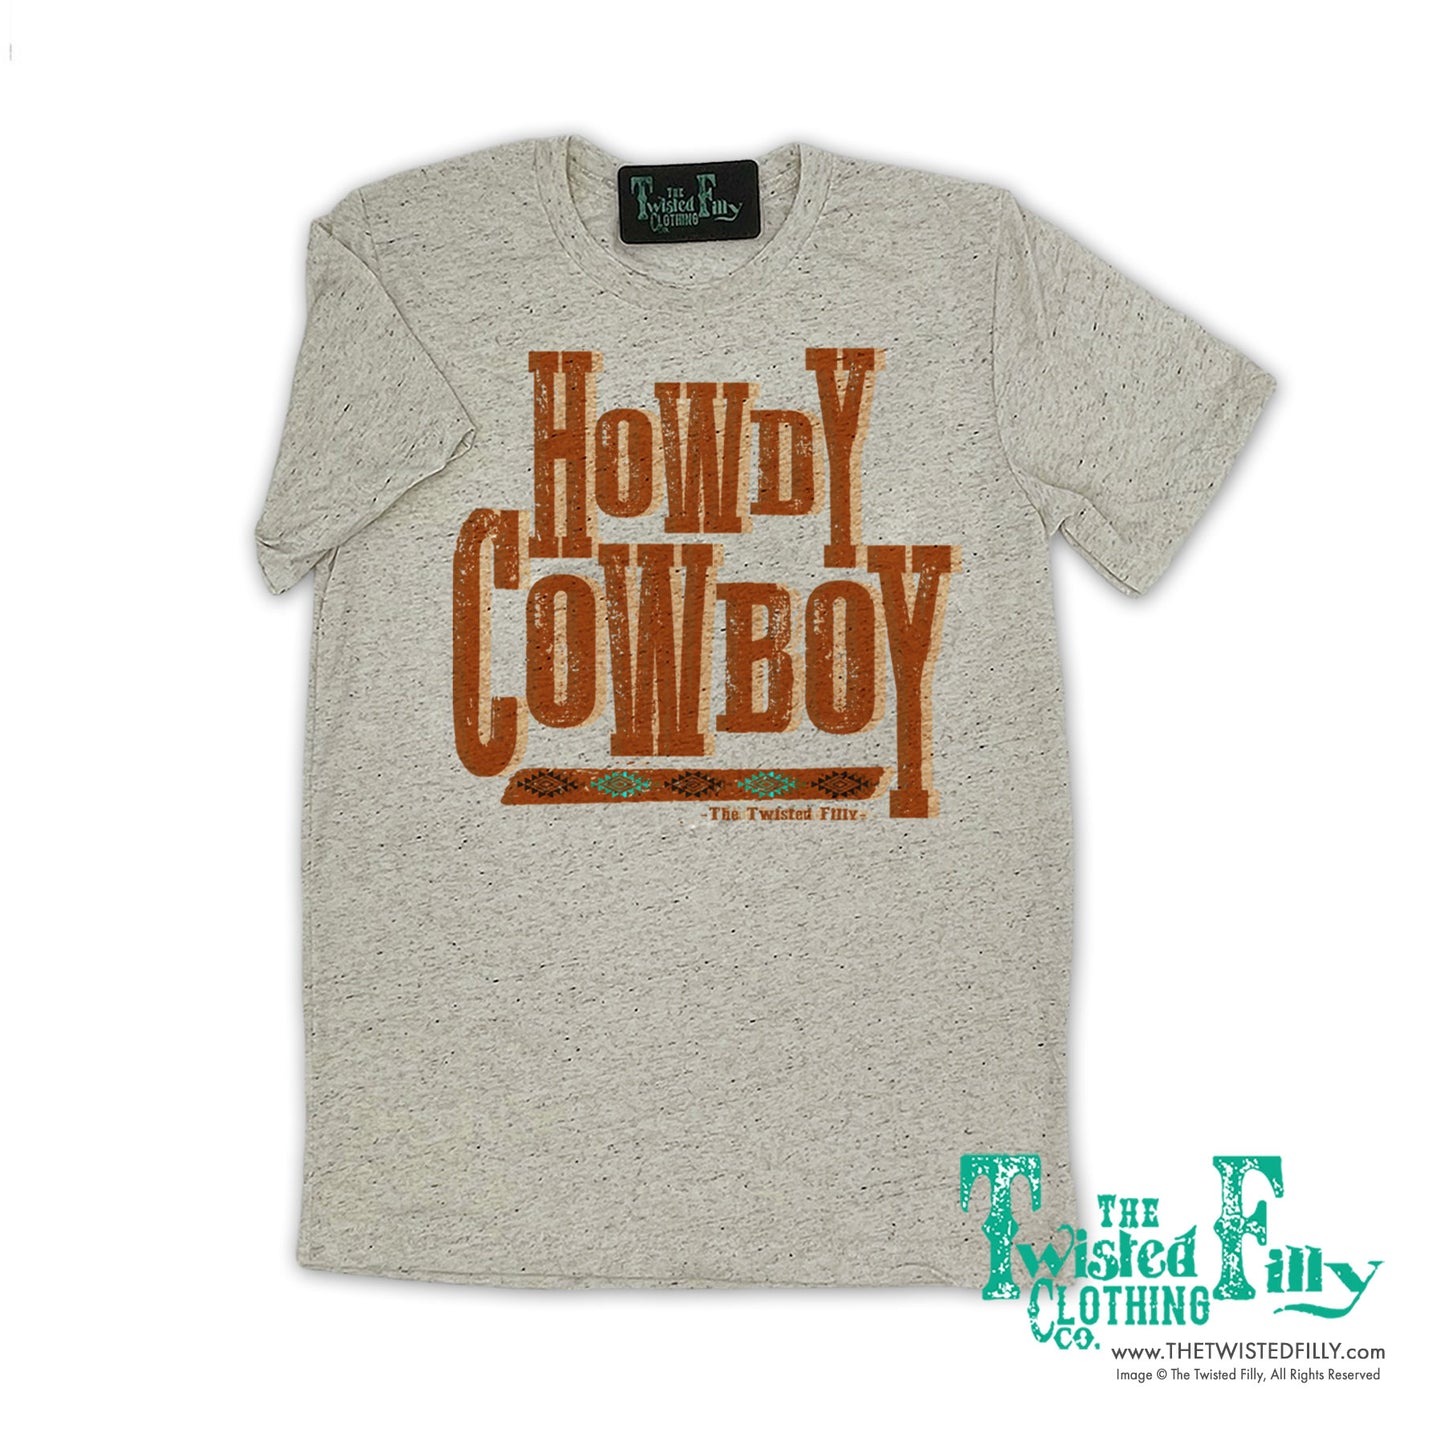 Howdy Cowboy - S/S Adult Crew Neck Ladies Tee - Assorted Colors